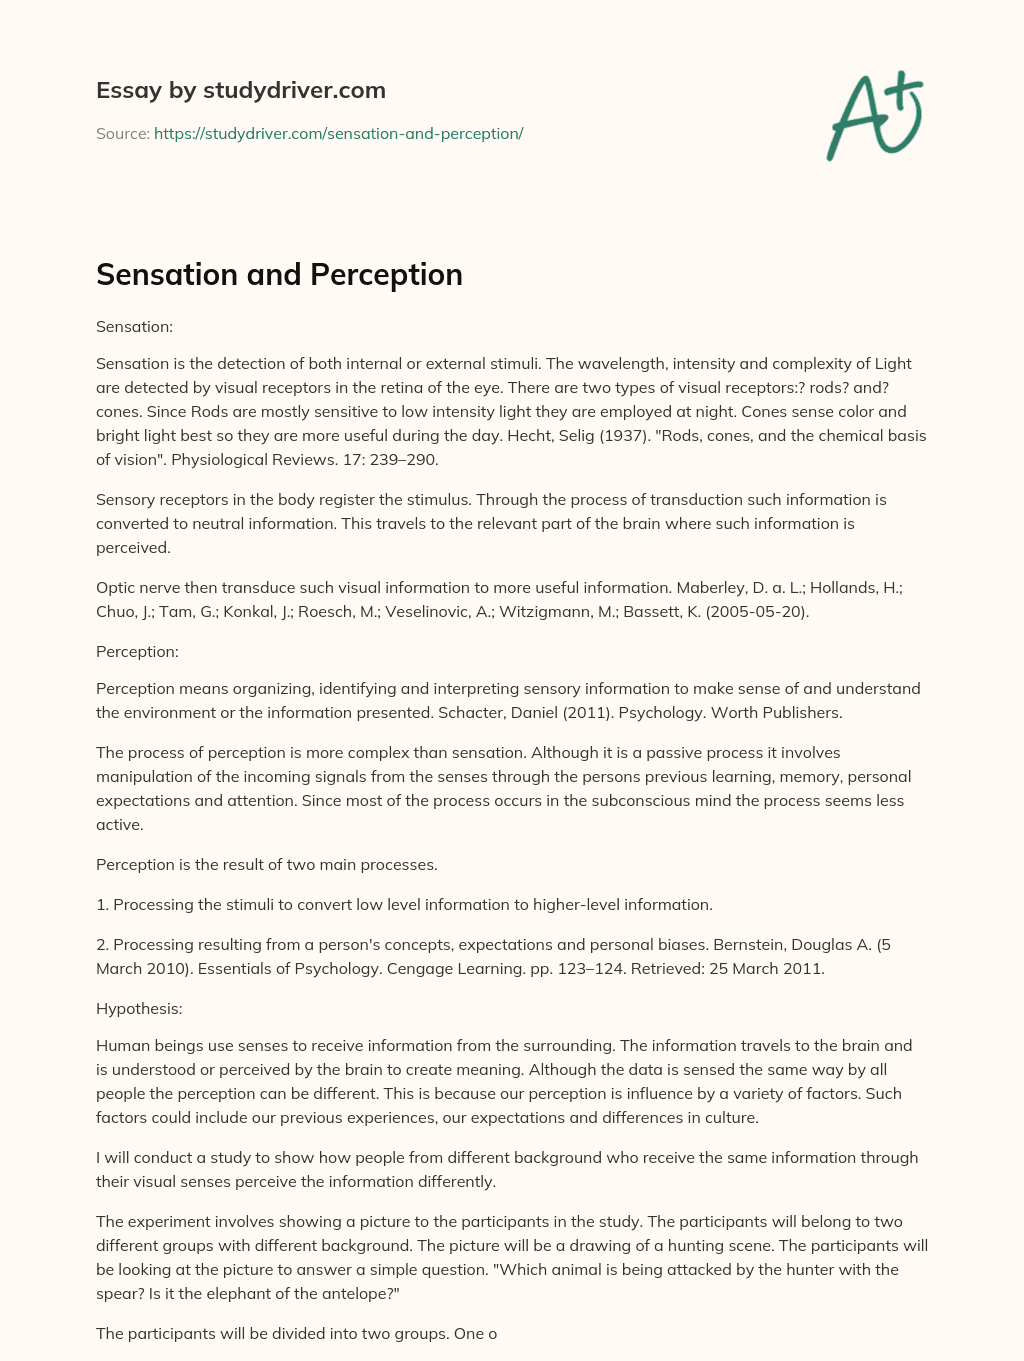 Sensation and Perception essay